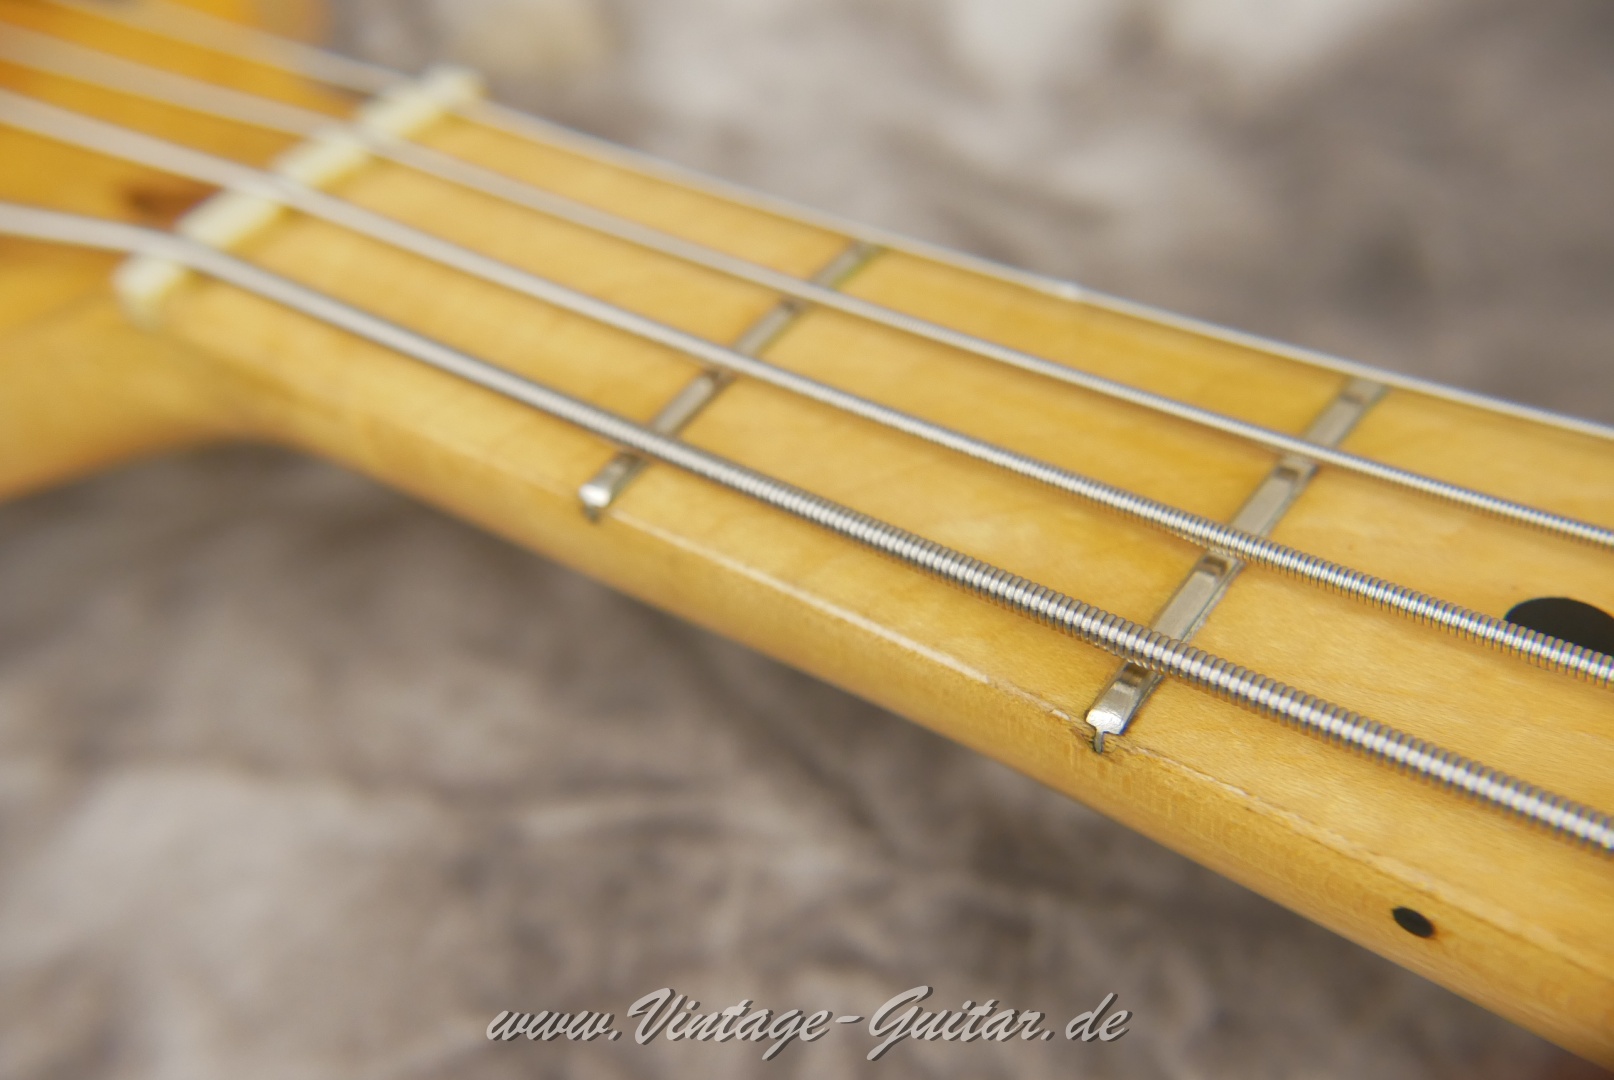 Fender-Precision-Bass-1973-015.JPG